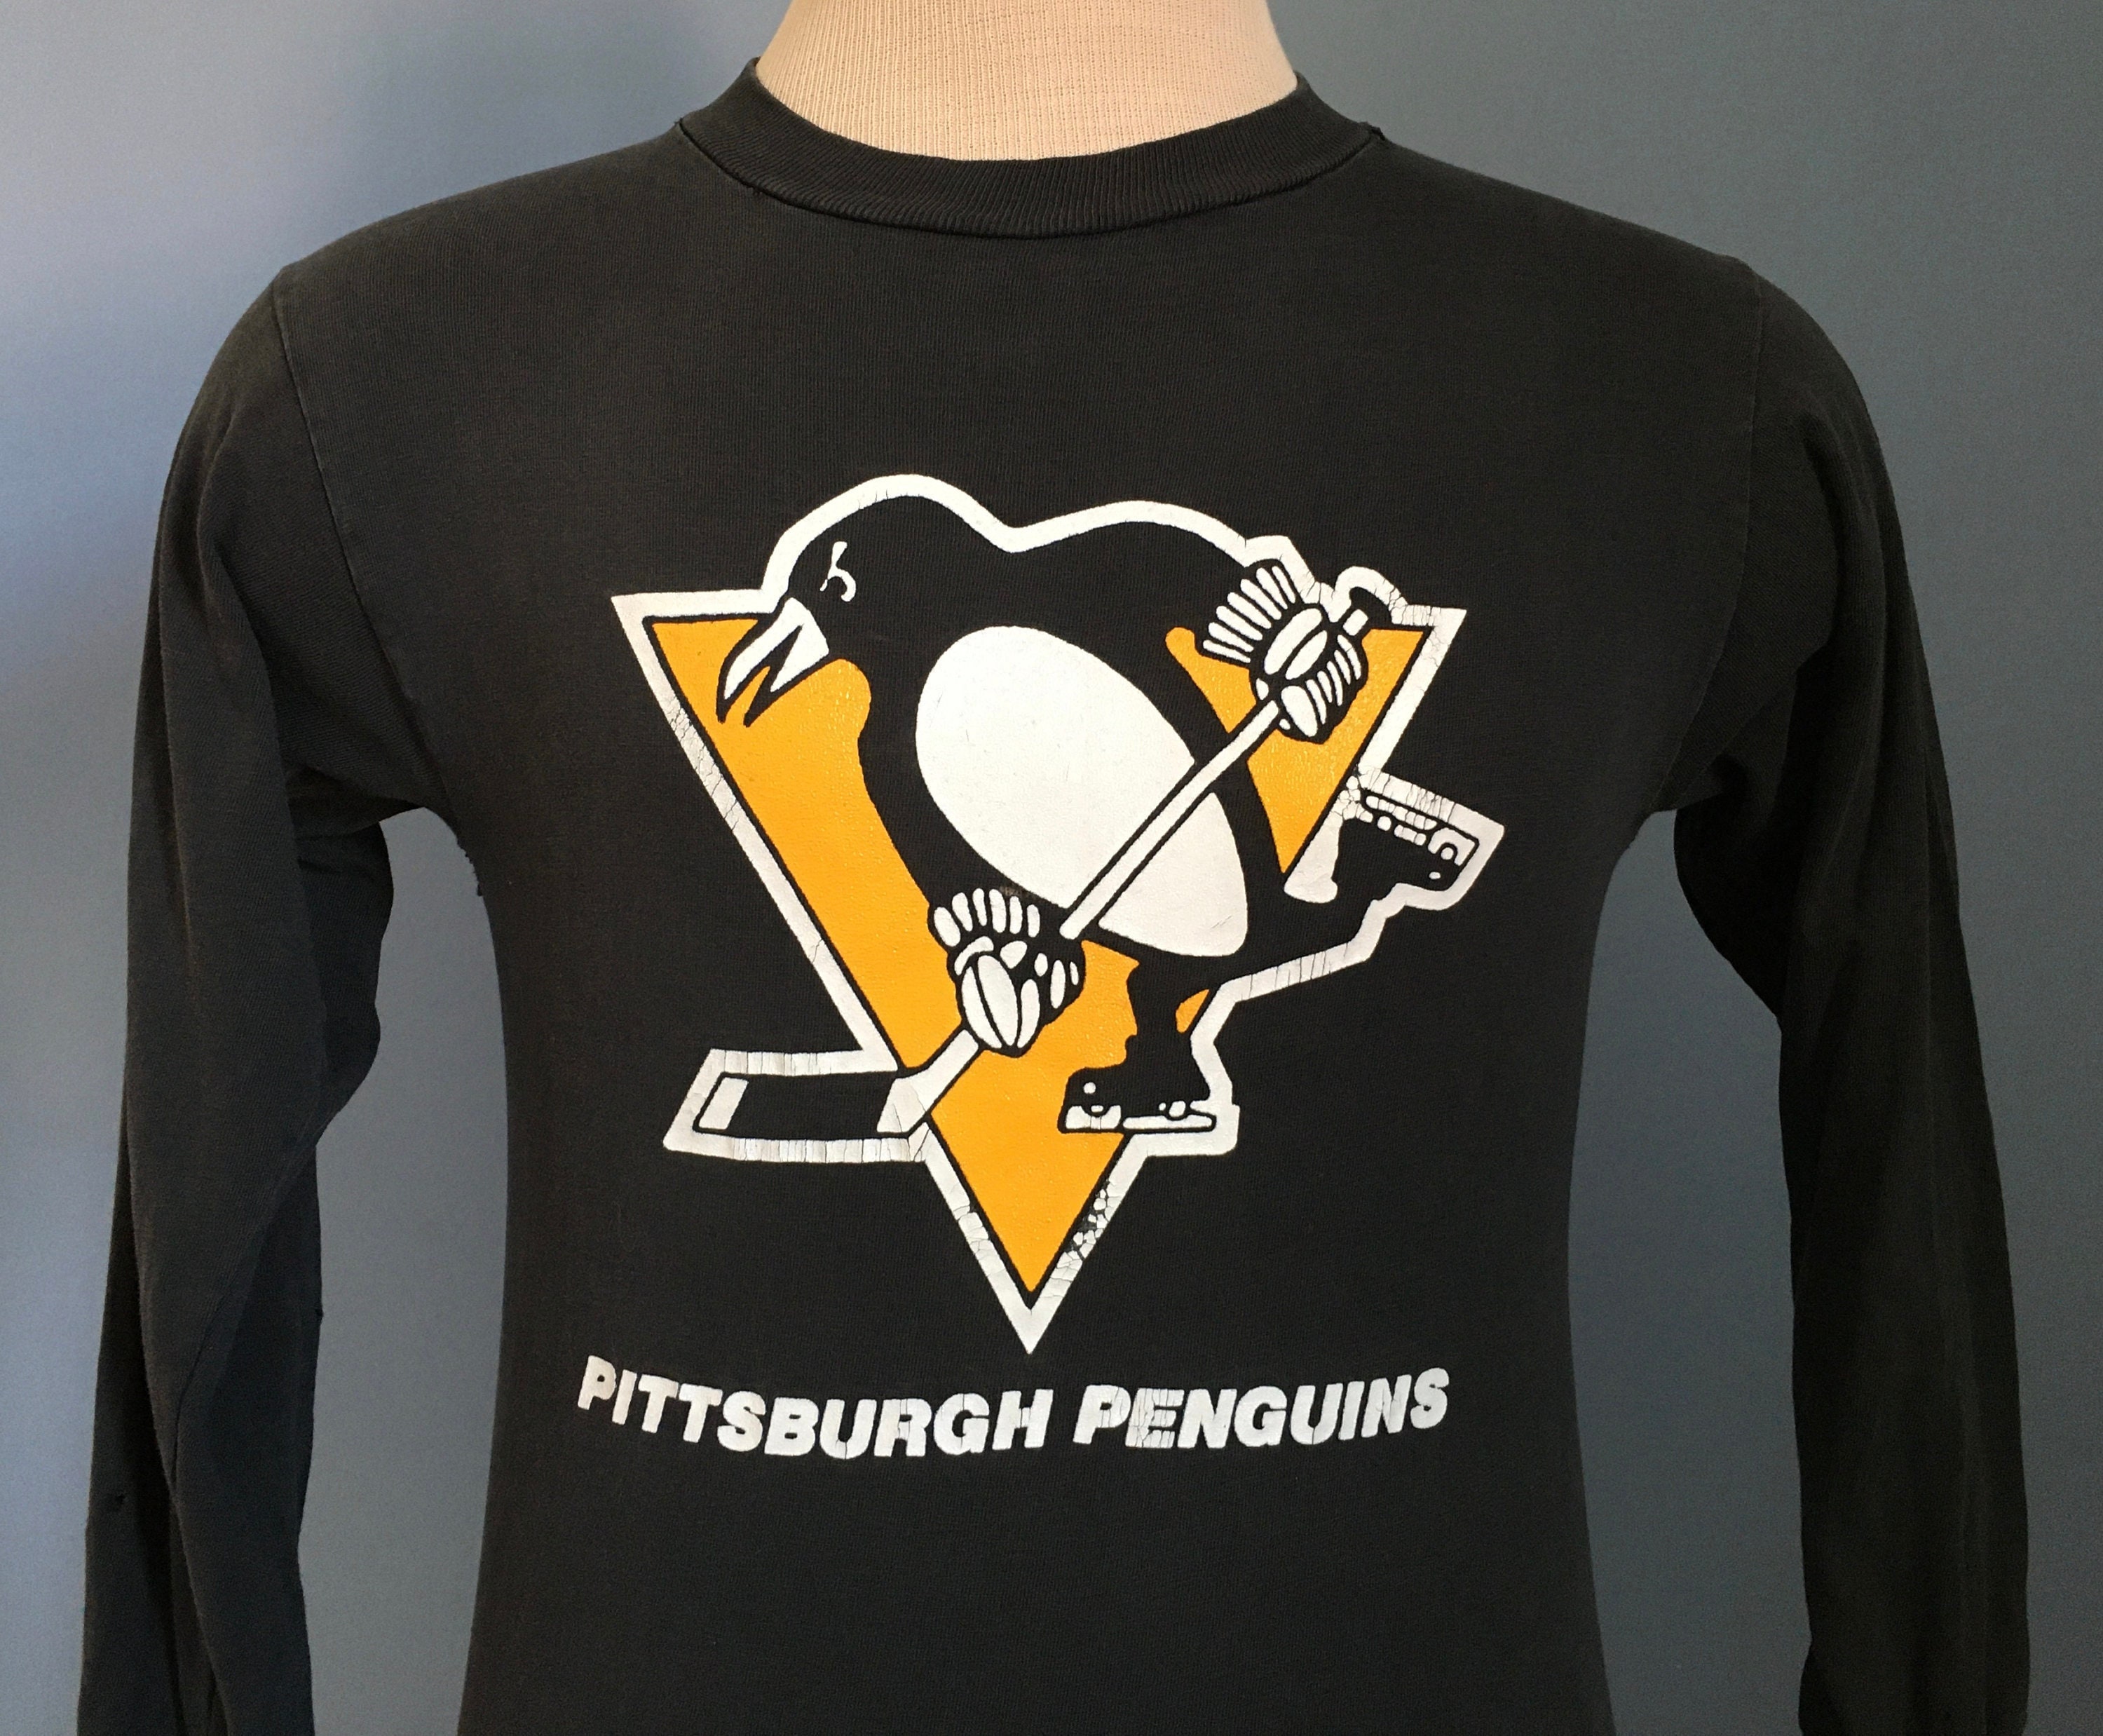 NHL Pittsburgh Penguins Mickey Mouse Disney Hockey T Shirt V-Neck T-Shirt